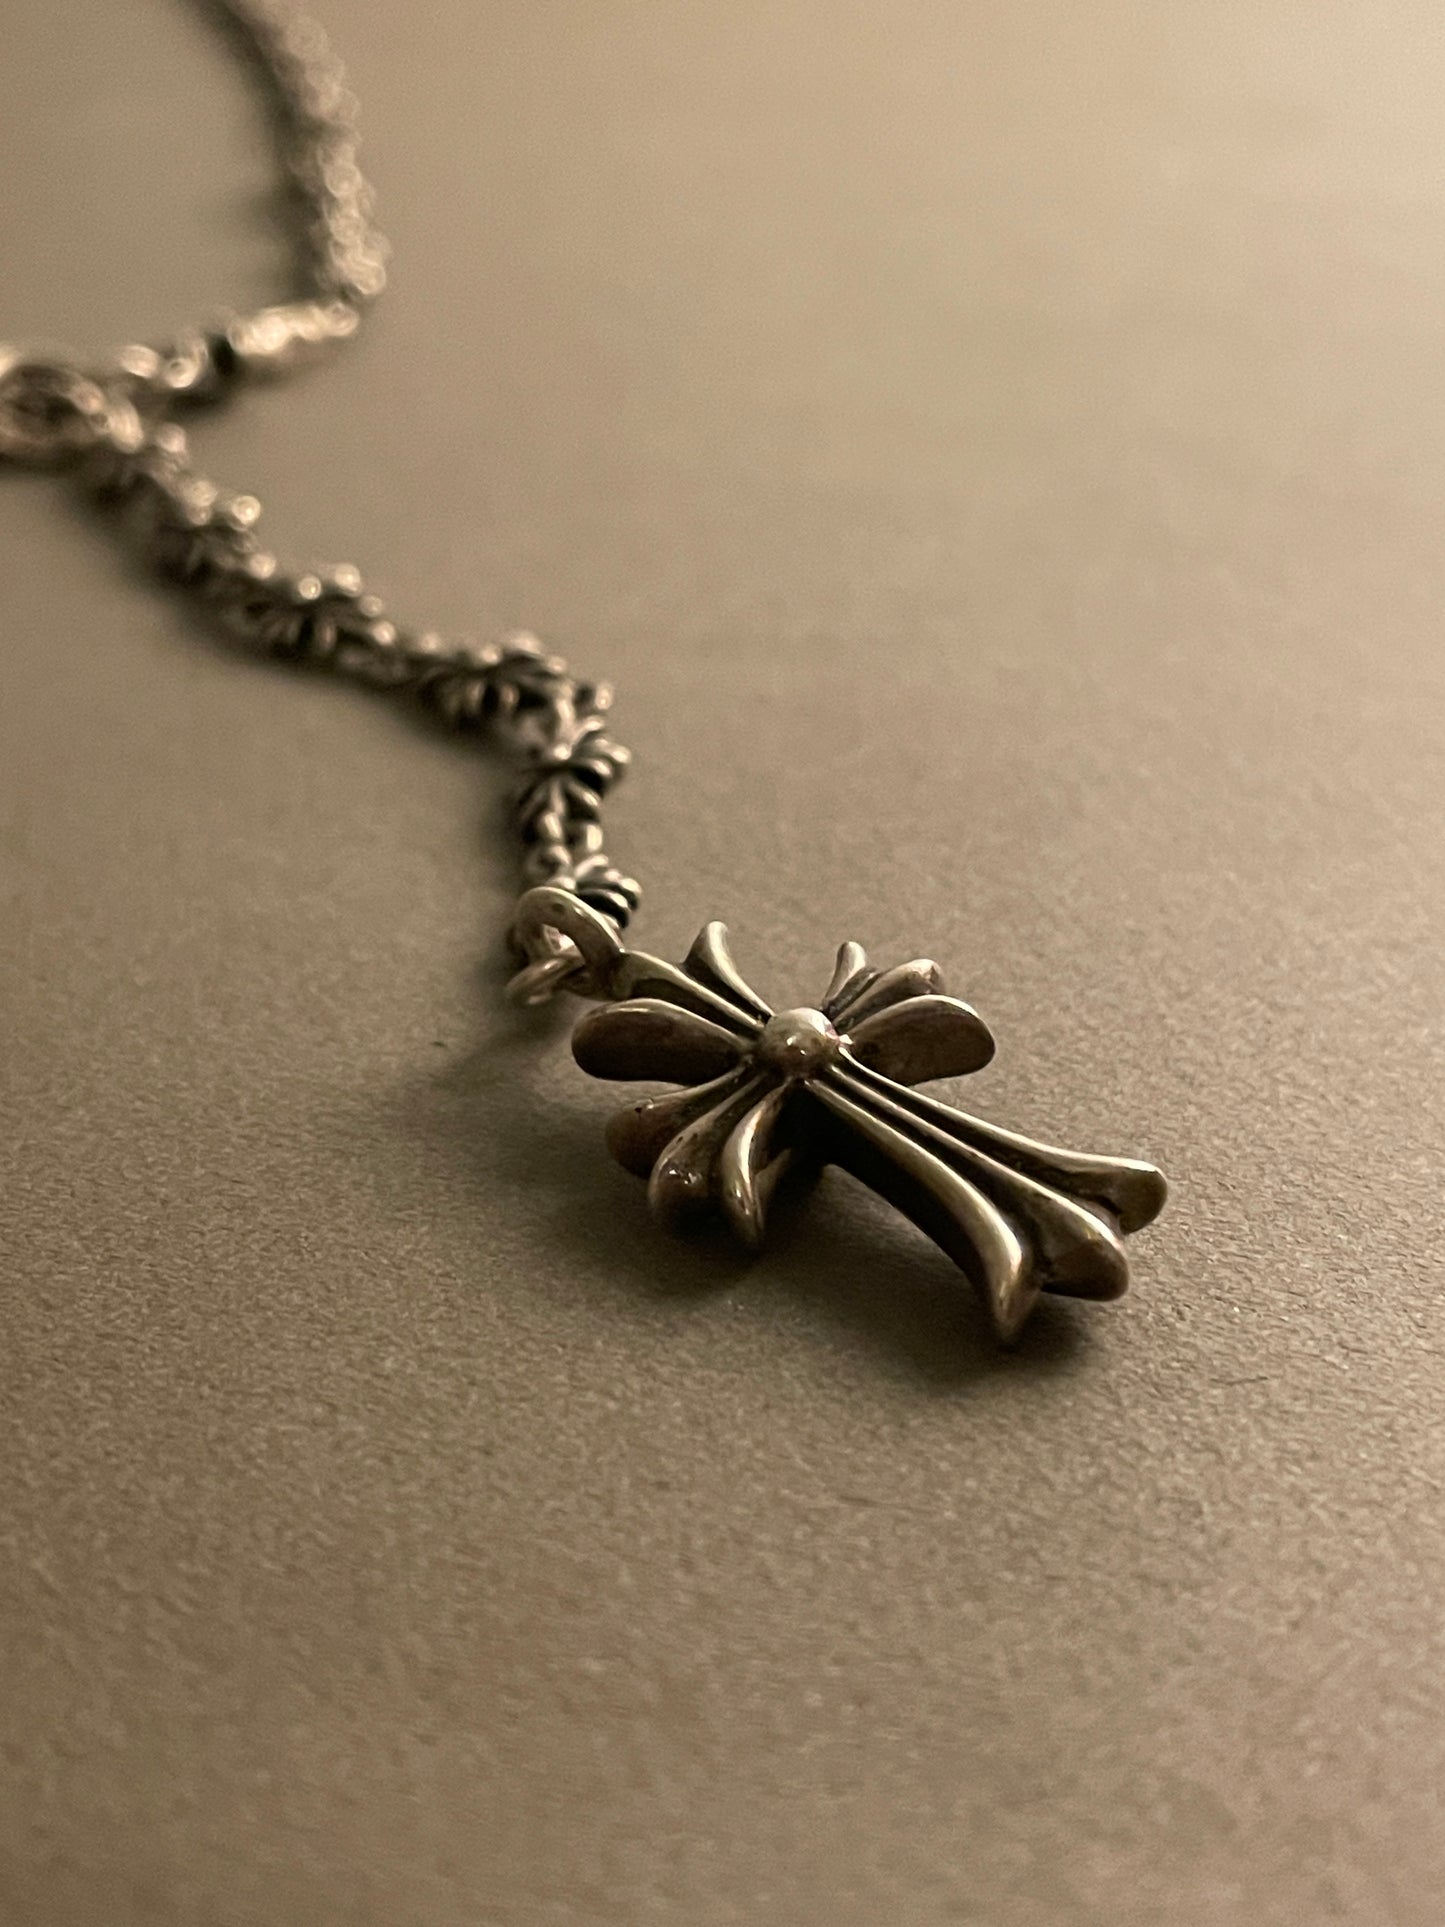 Chrome Hearts Rosary Necklace